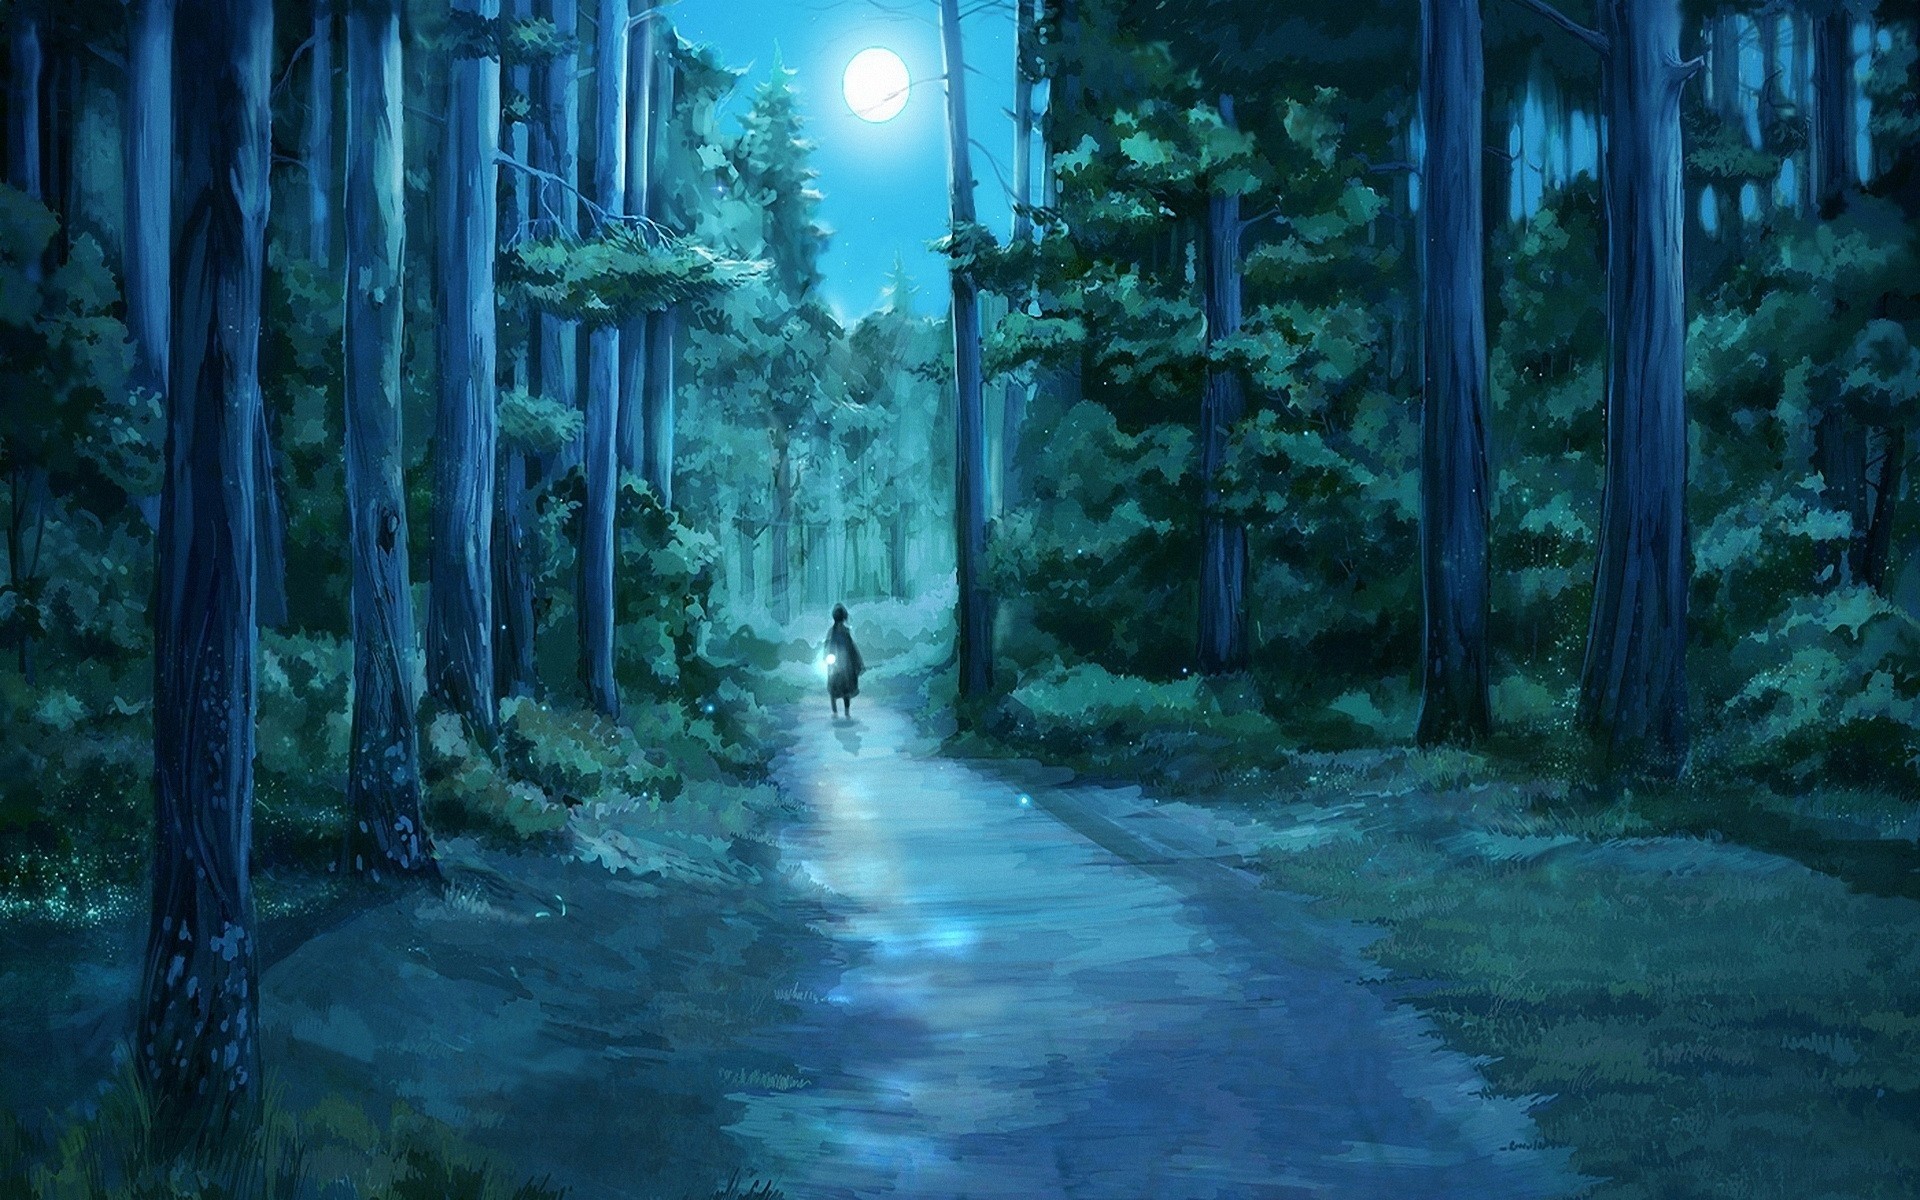 Anime forest background Vectors & Illustrations for Free Download | Freepik